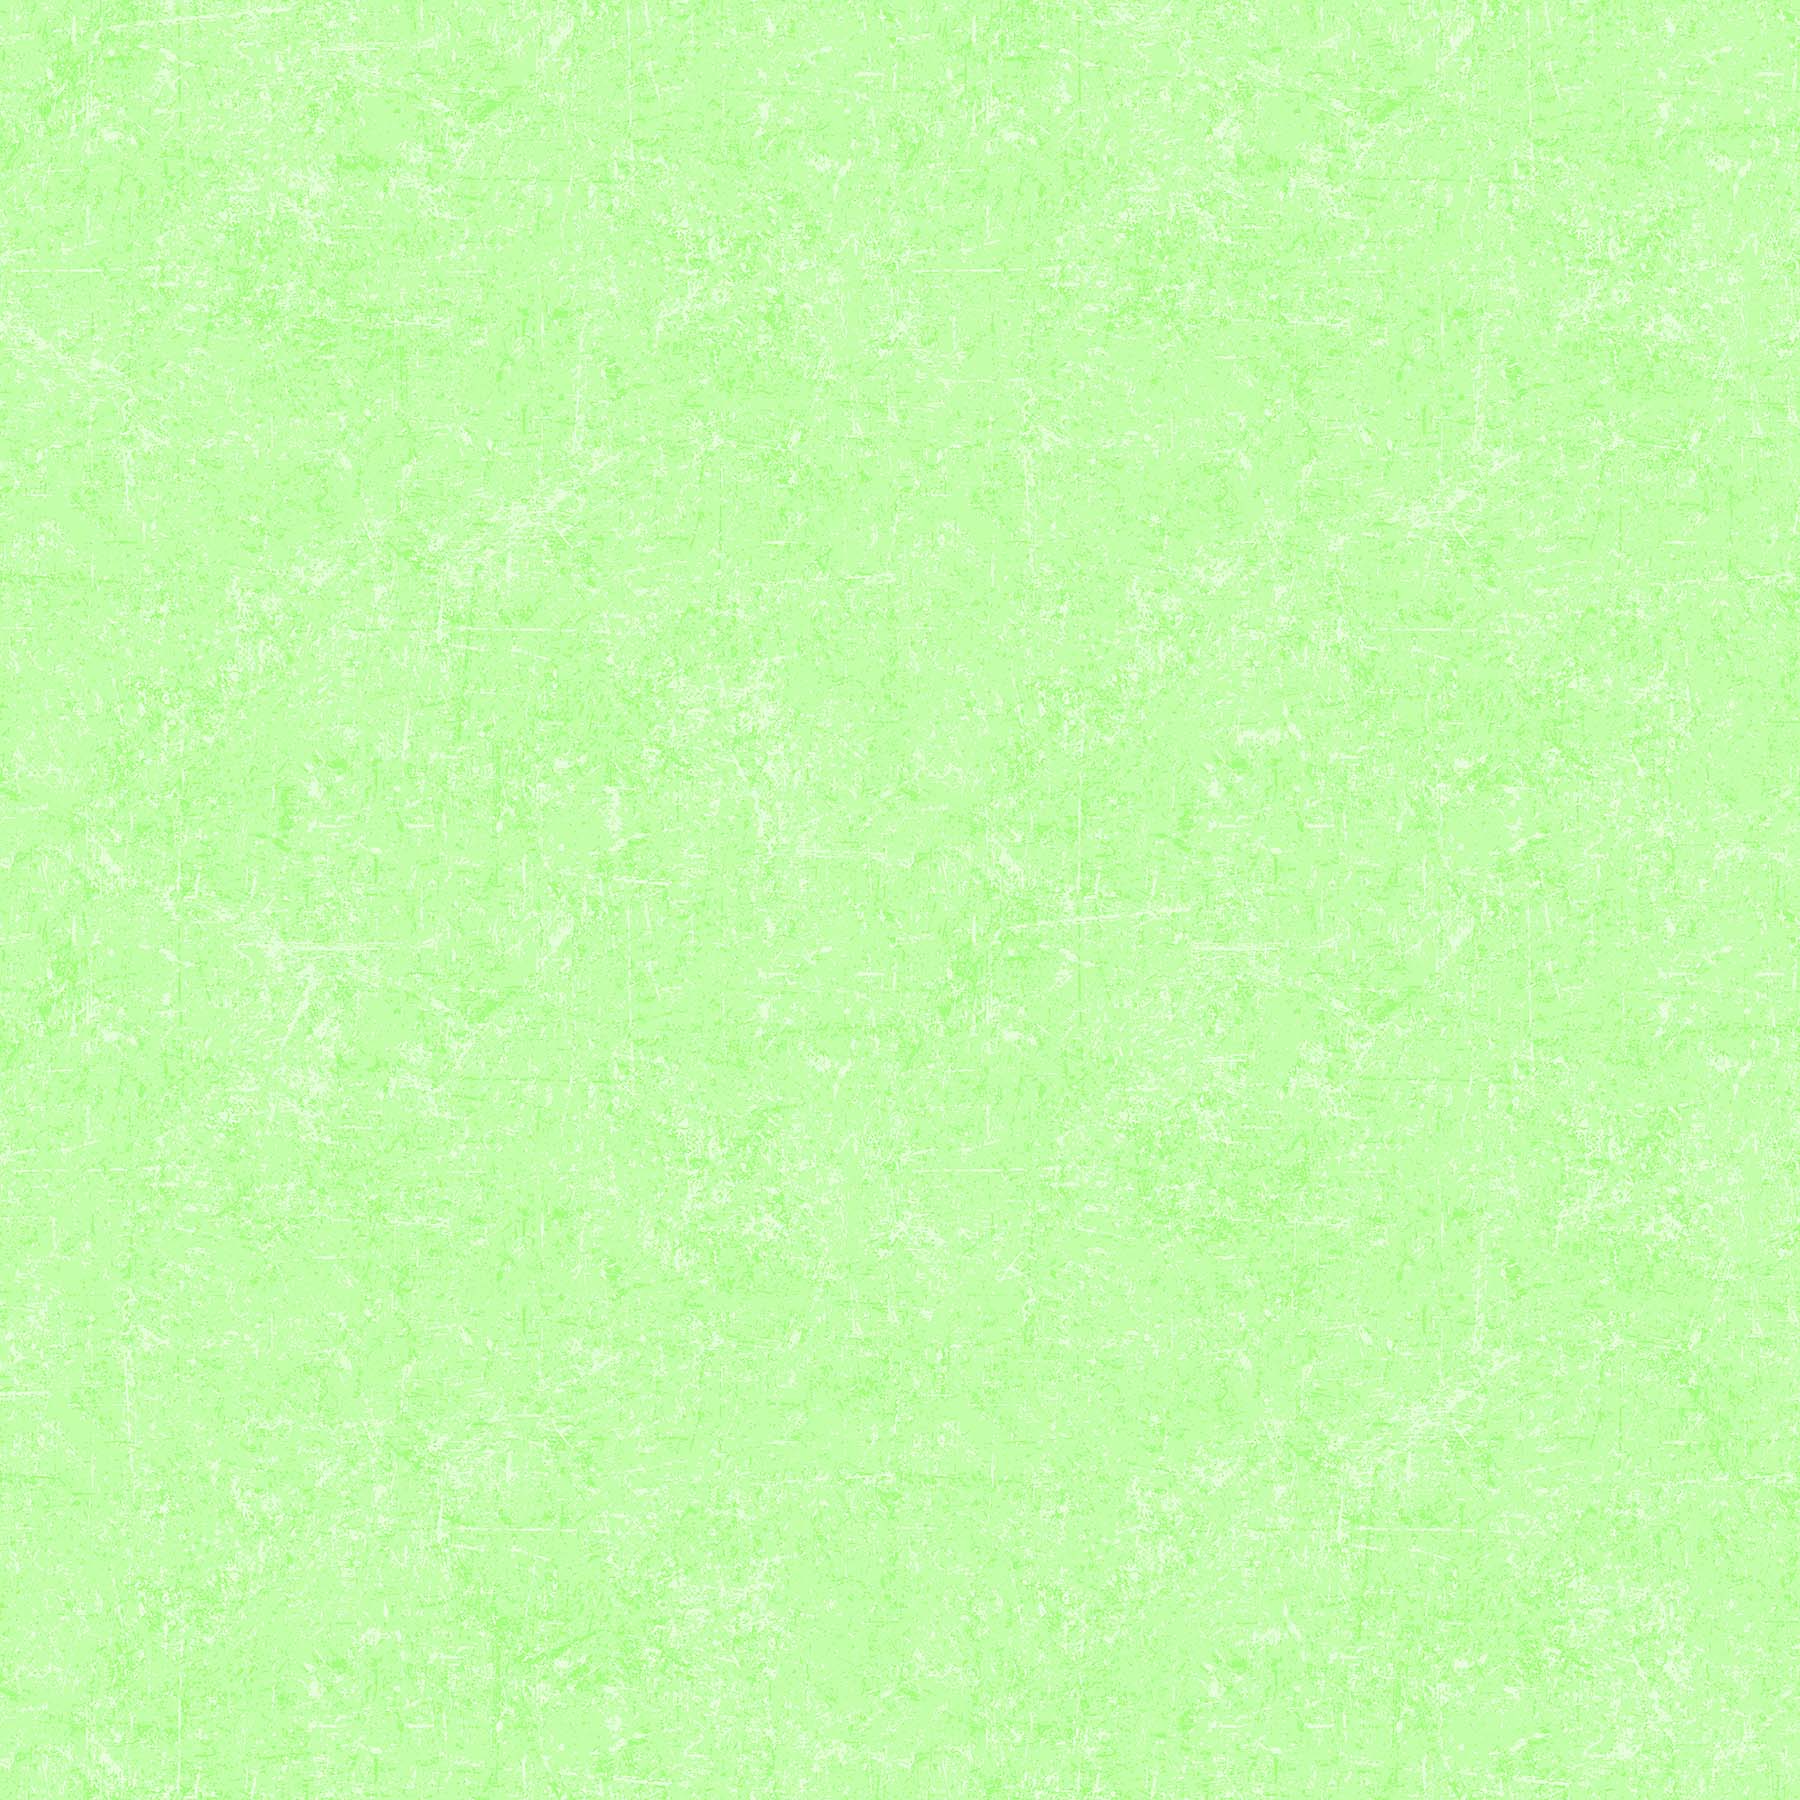 Glisten Sorbet Quilt Fabric - Blender in Grasshopper Green - P10091-73